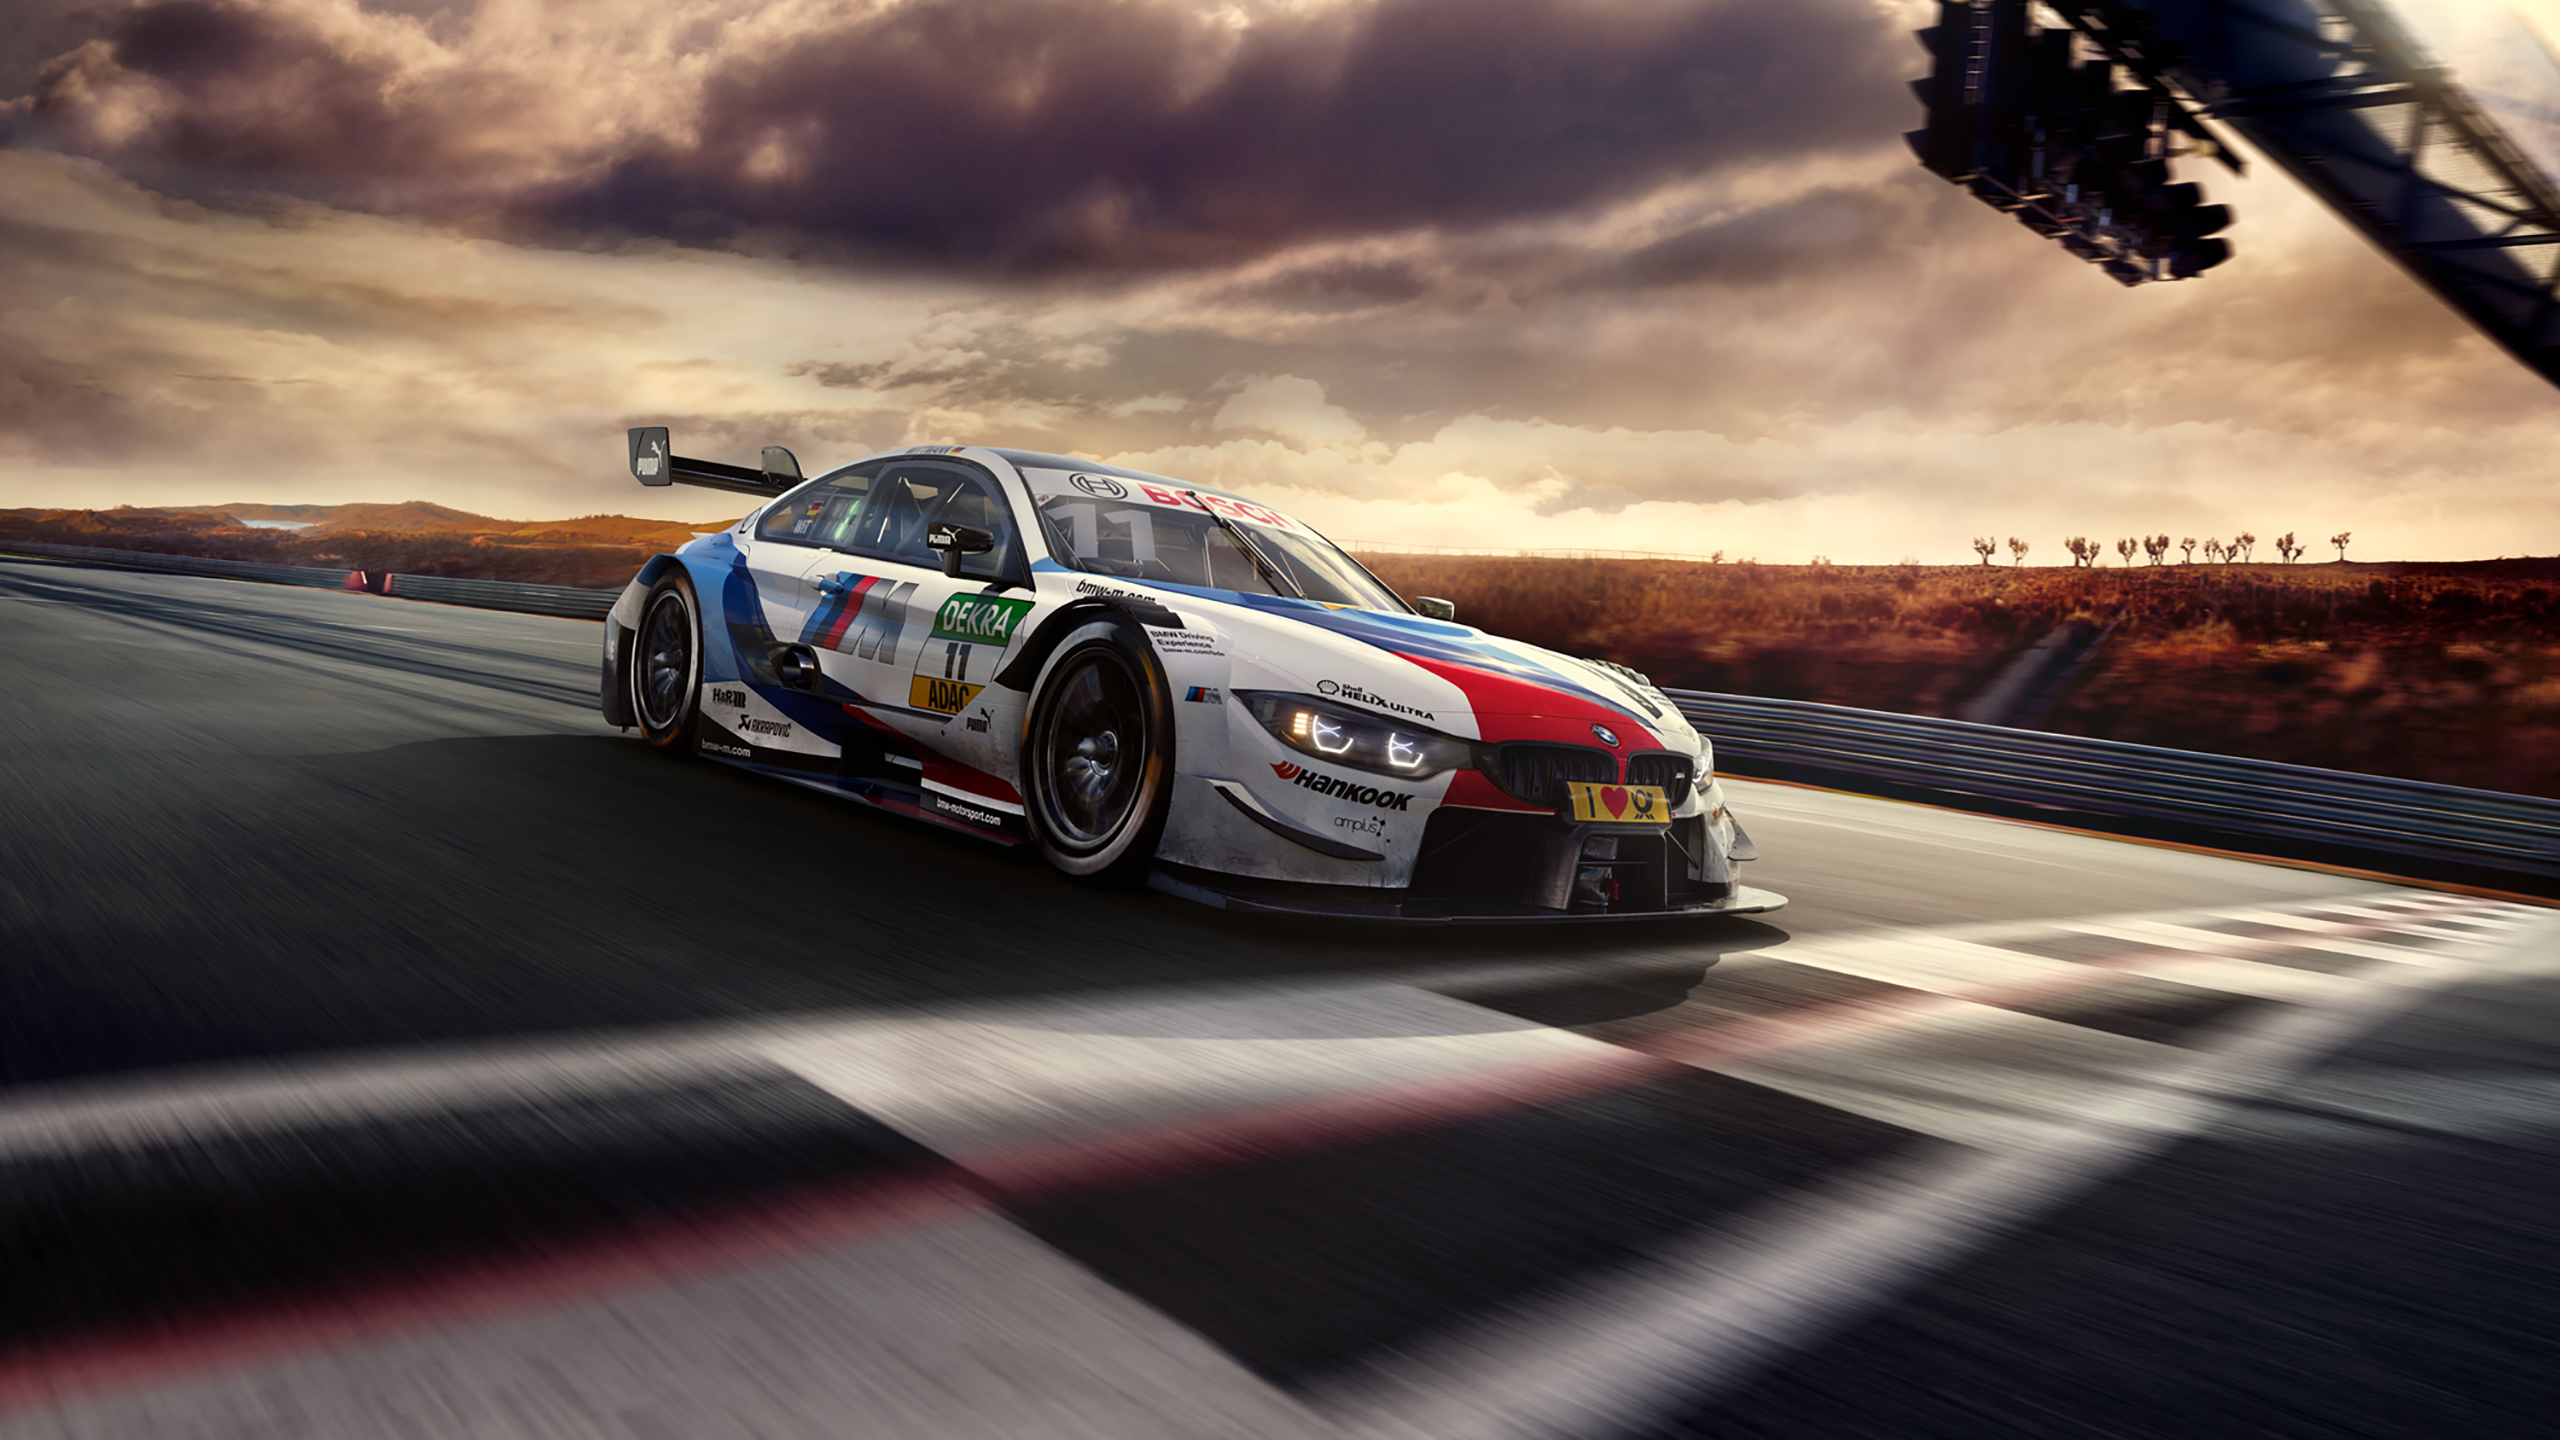 Motorsport 1080P, 2K, 4K, 5K HD wallpapers free download